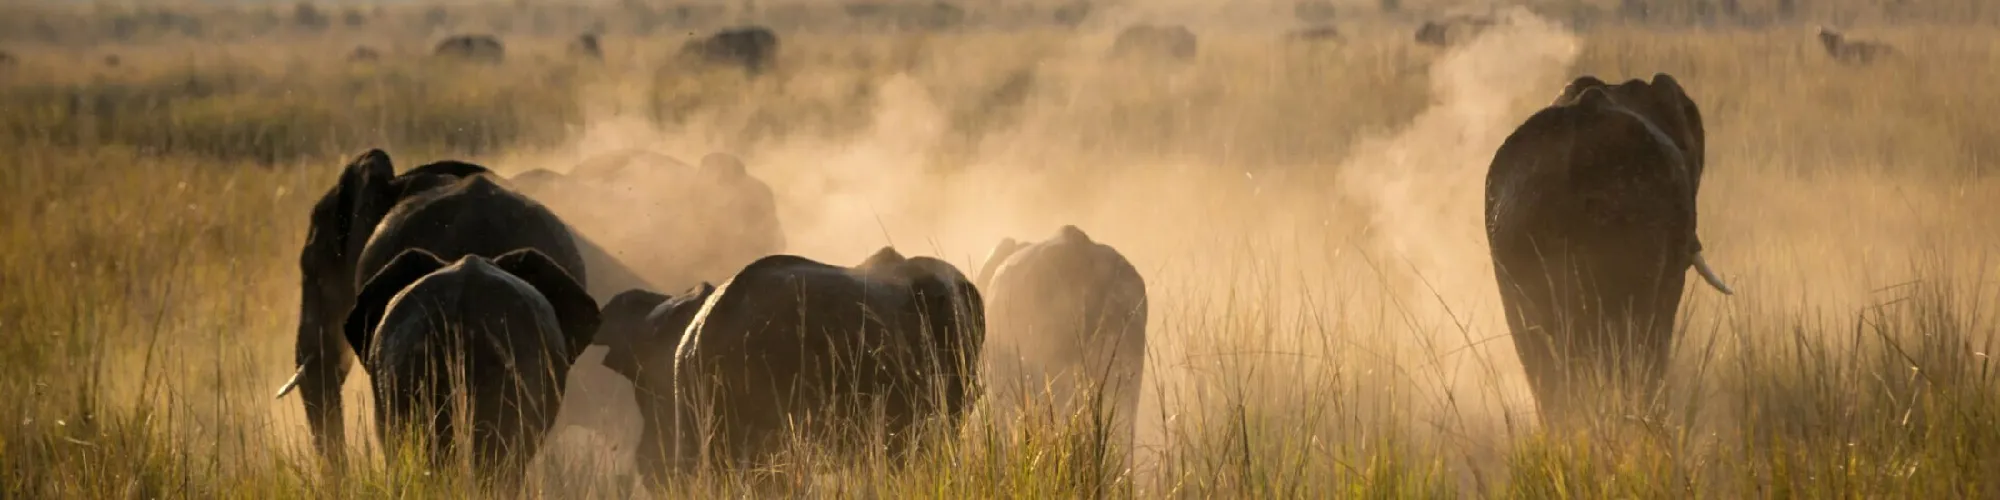 Urlaub in Botswana background image